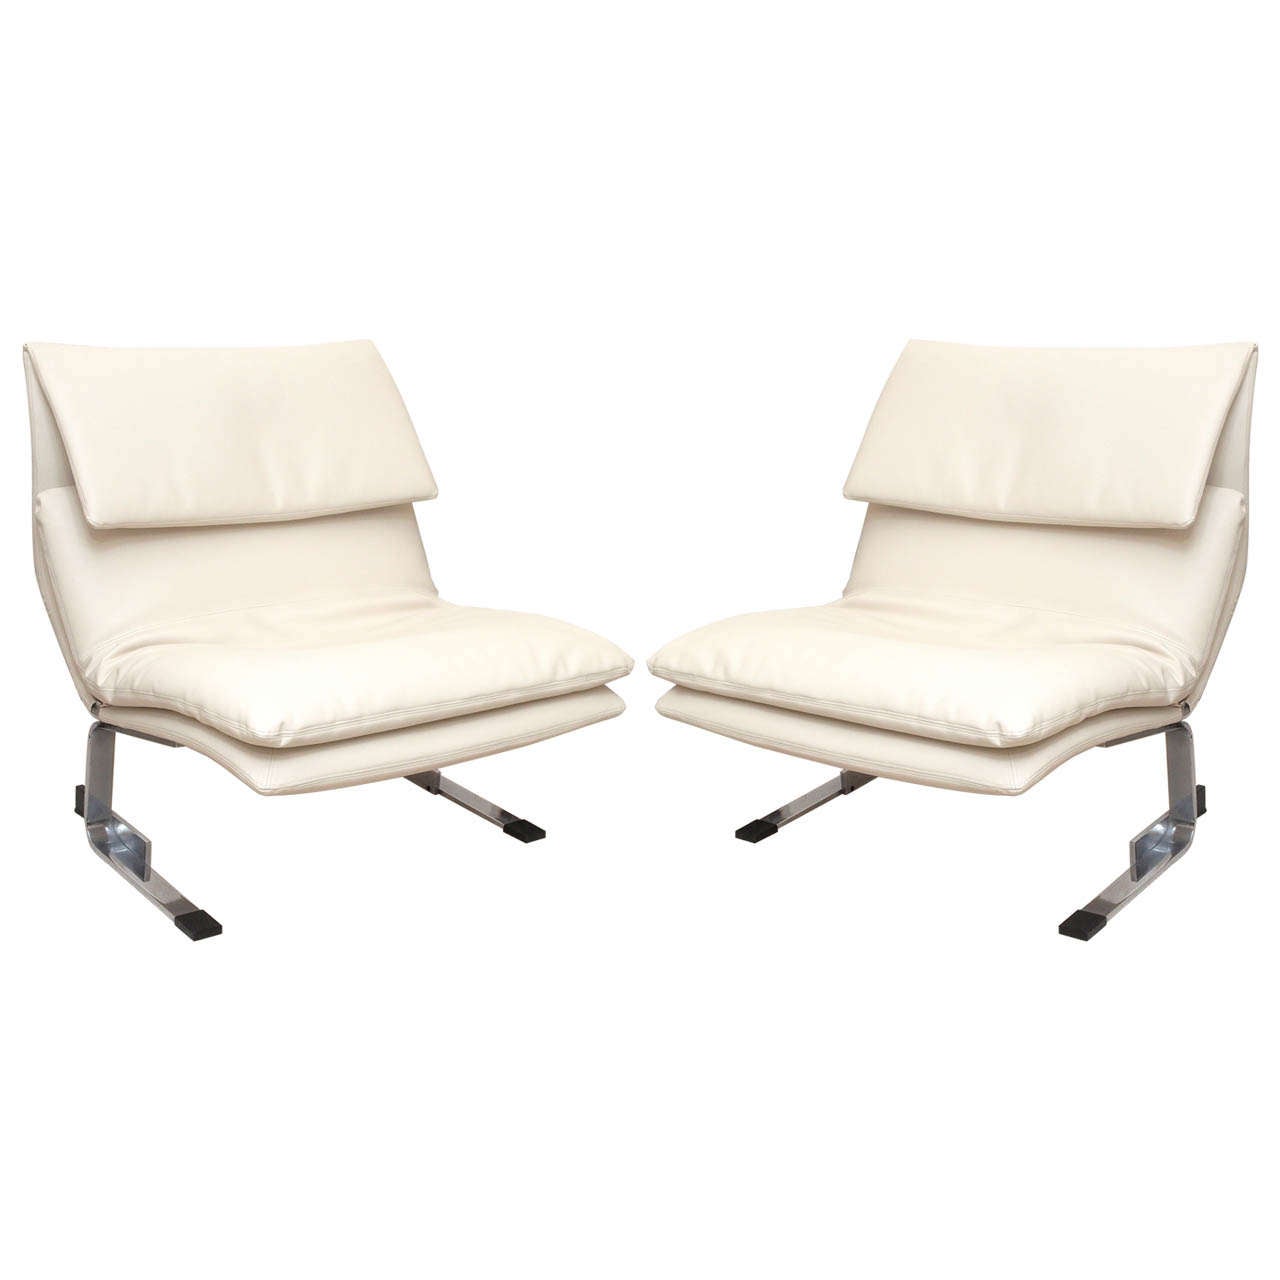 Pair Saporiti Italia "Onda" Lounge Chairs